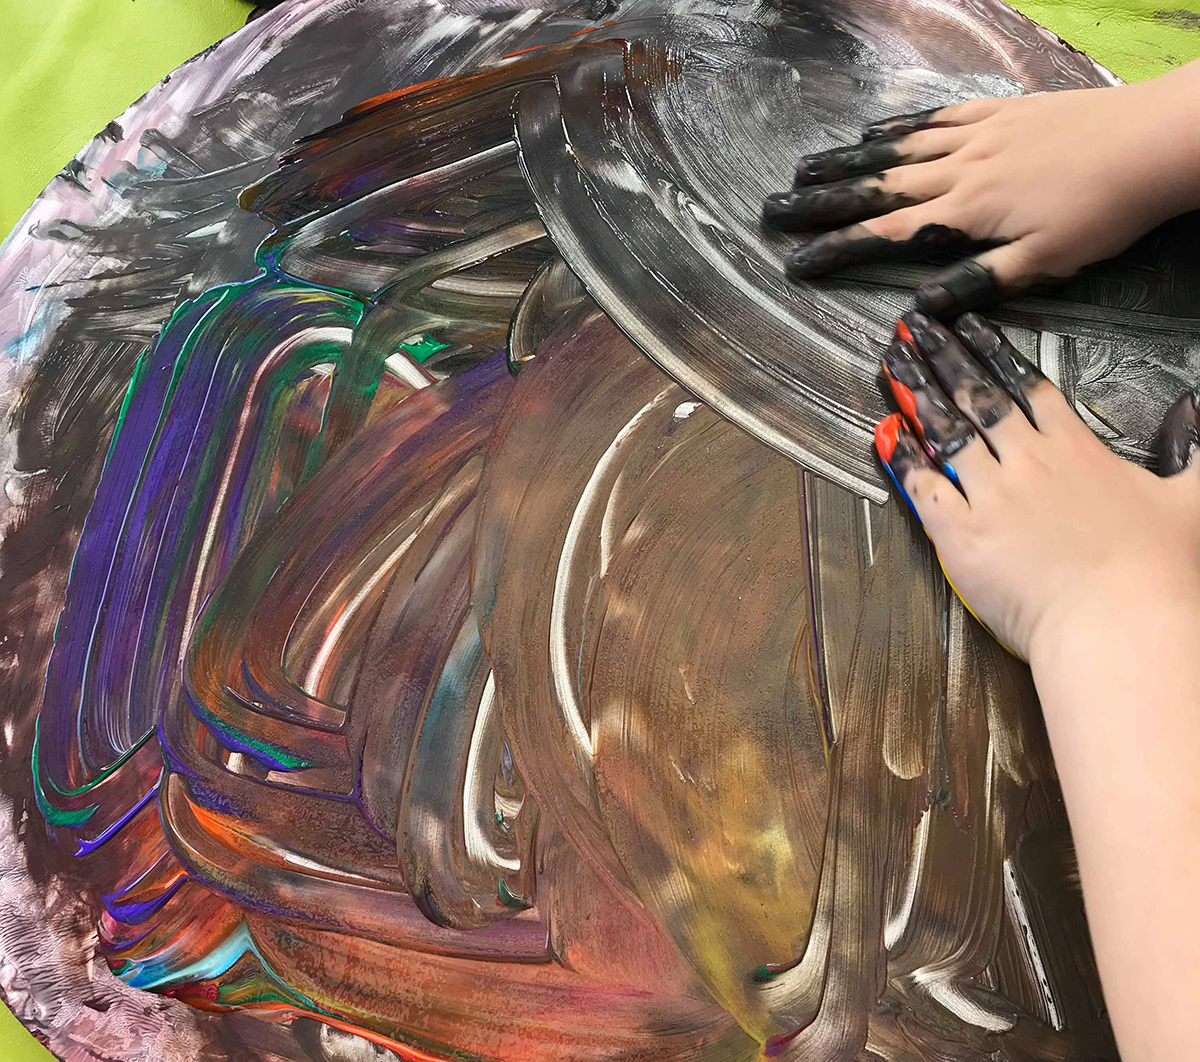 Preschooler Videos : Finger painting fun